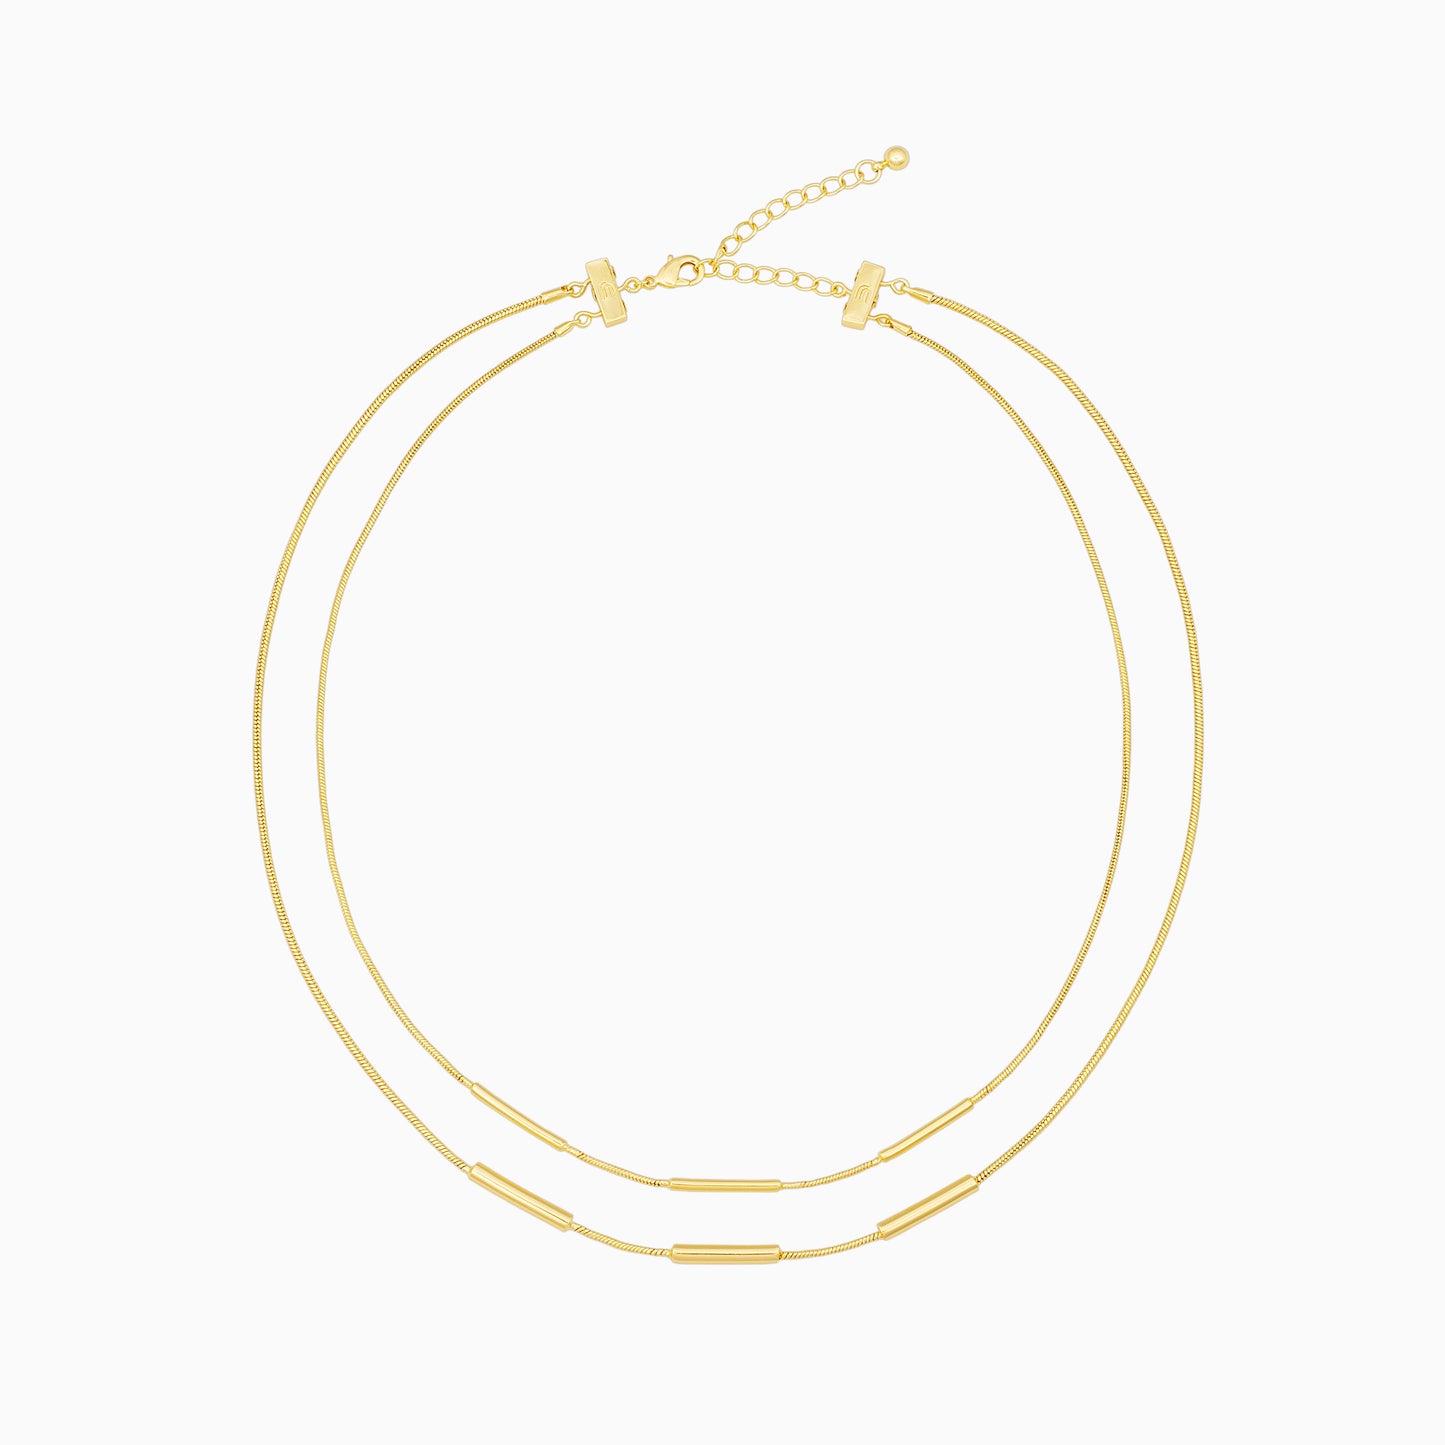 Tuscany Necklace | Gold | Product Image | Uncommon James